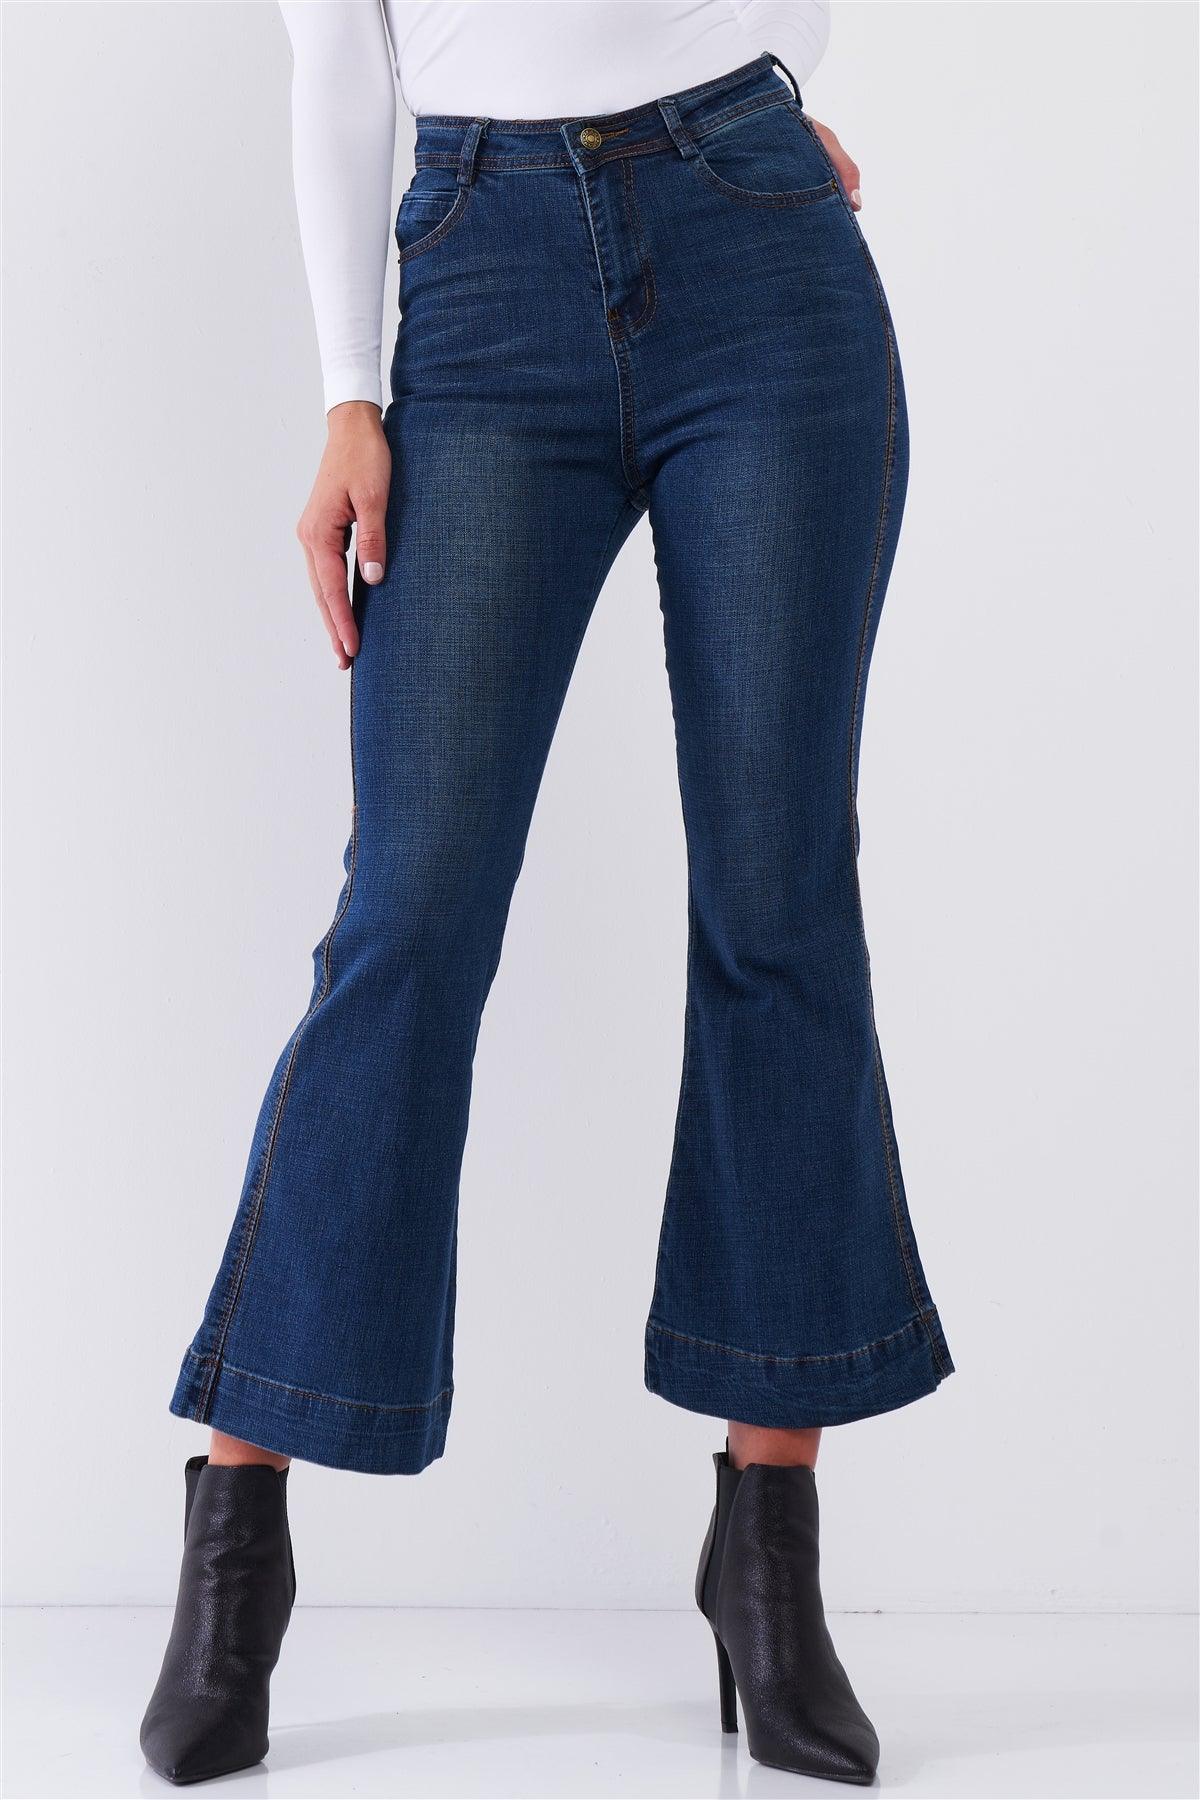 Blue Denim High Waisted Ankle Length Bell Bottom Flare Jeans /2-2-2